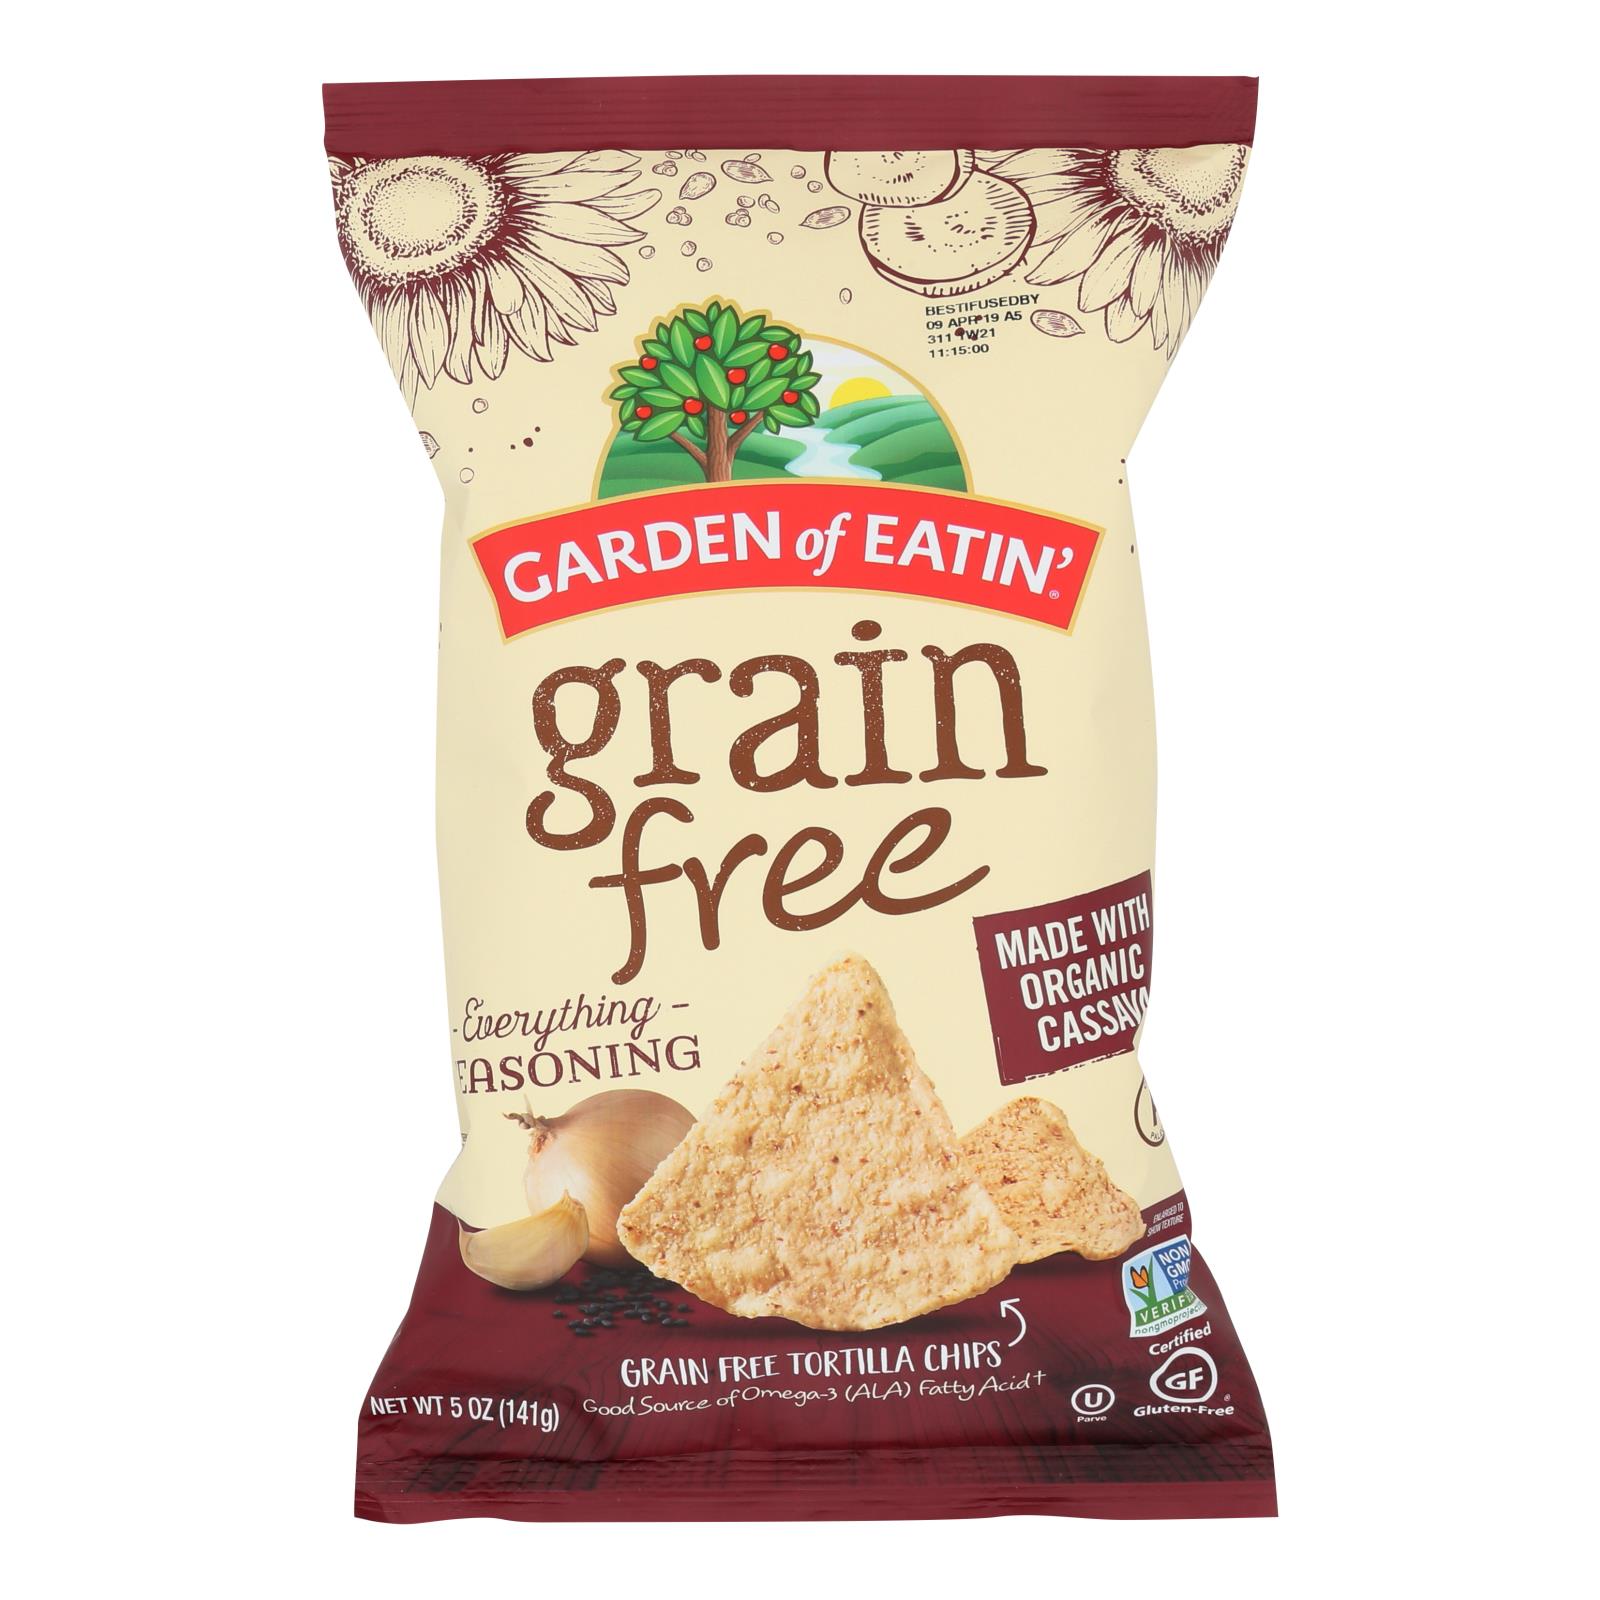 Garden Of Eatin' - Tort Chip Green Free Evryt - Case of 12 - 5 OZ